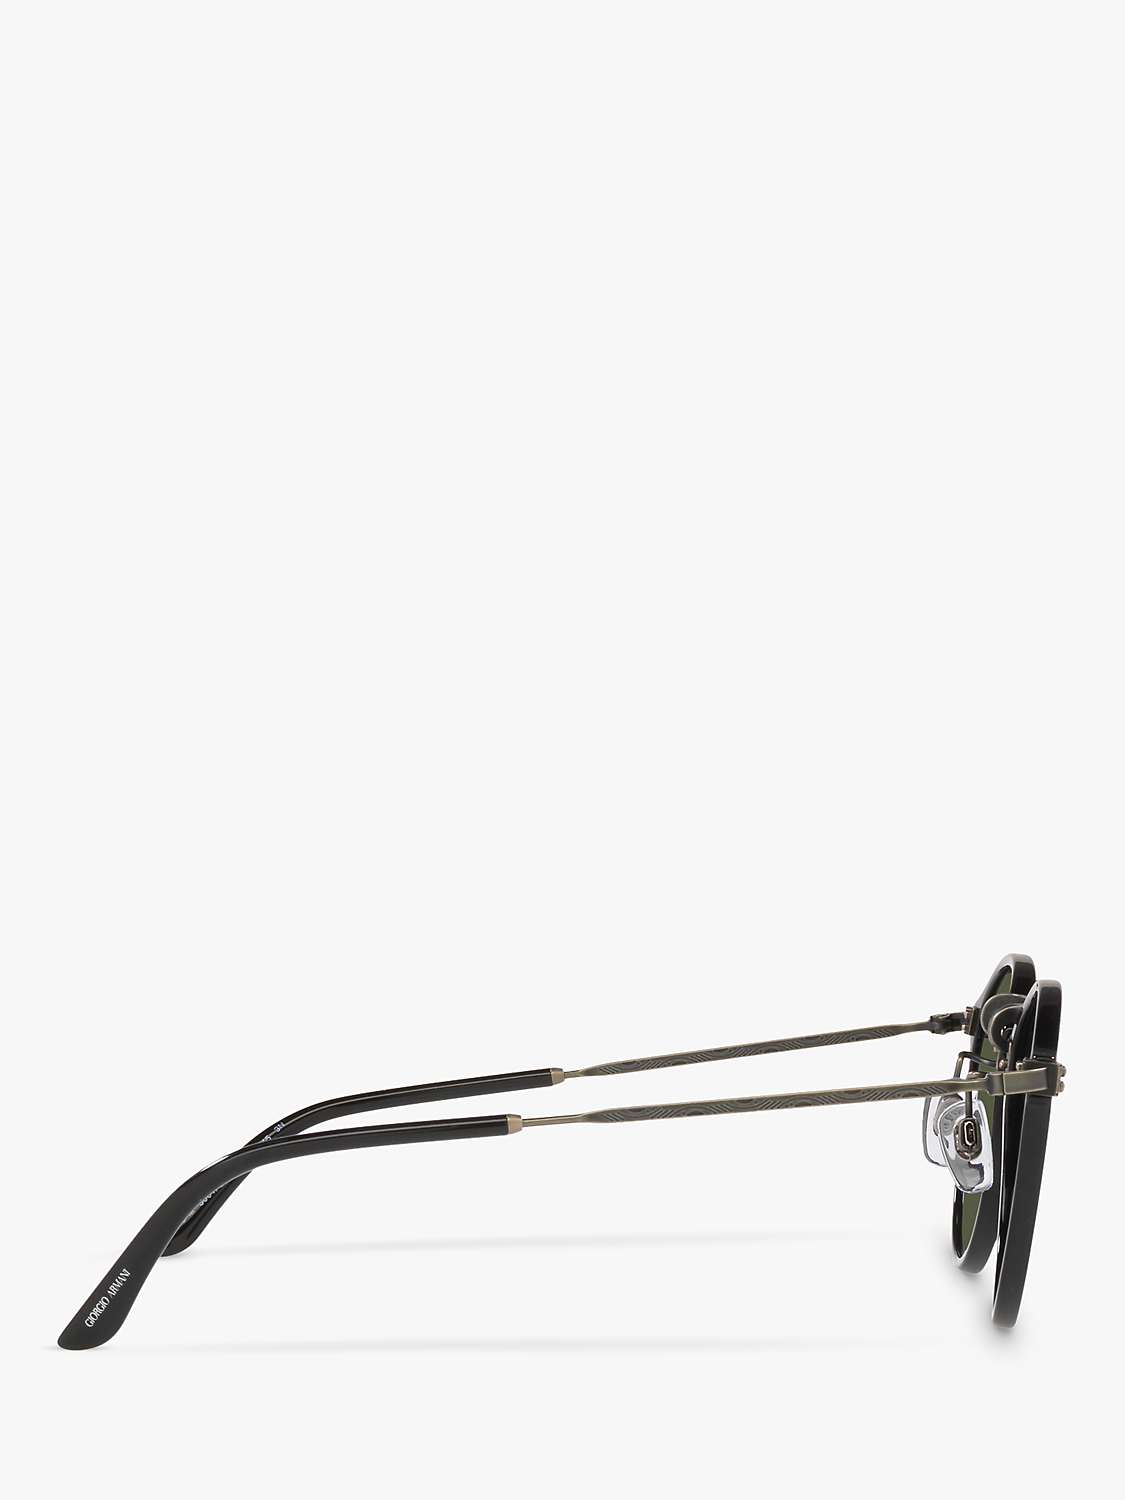 Buy Giorgio Armani AR 318SM Men's Oval Sunglasses, Black/Green Online at johnlewis.com